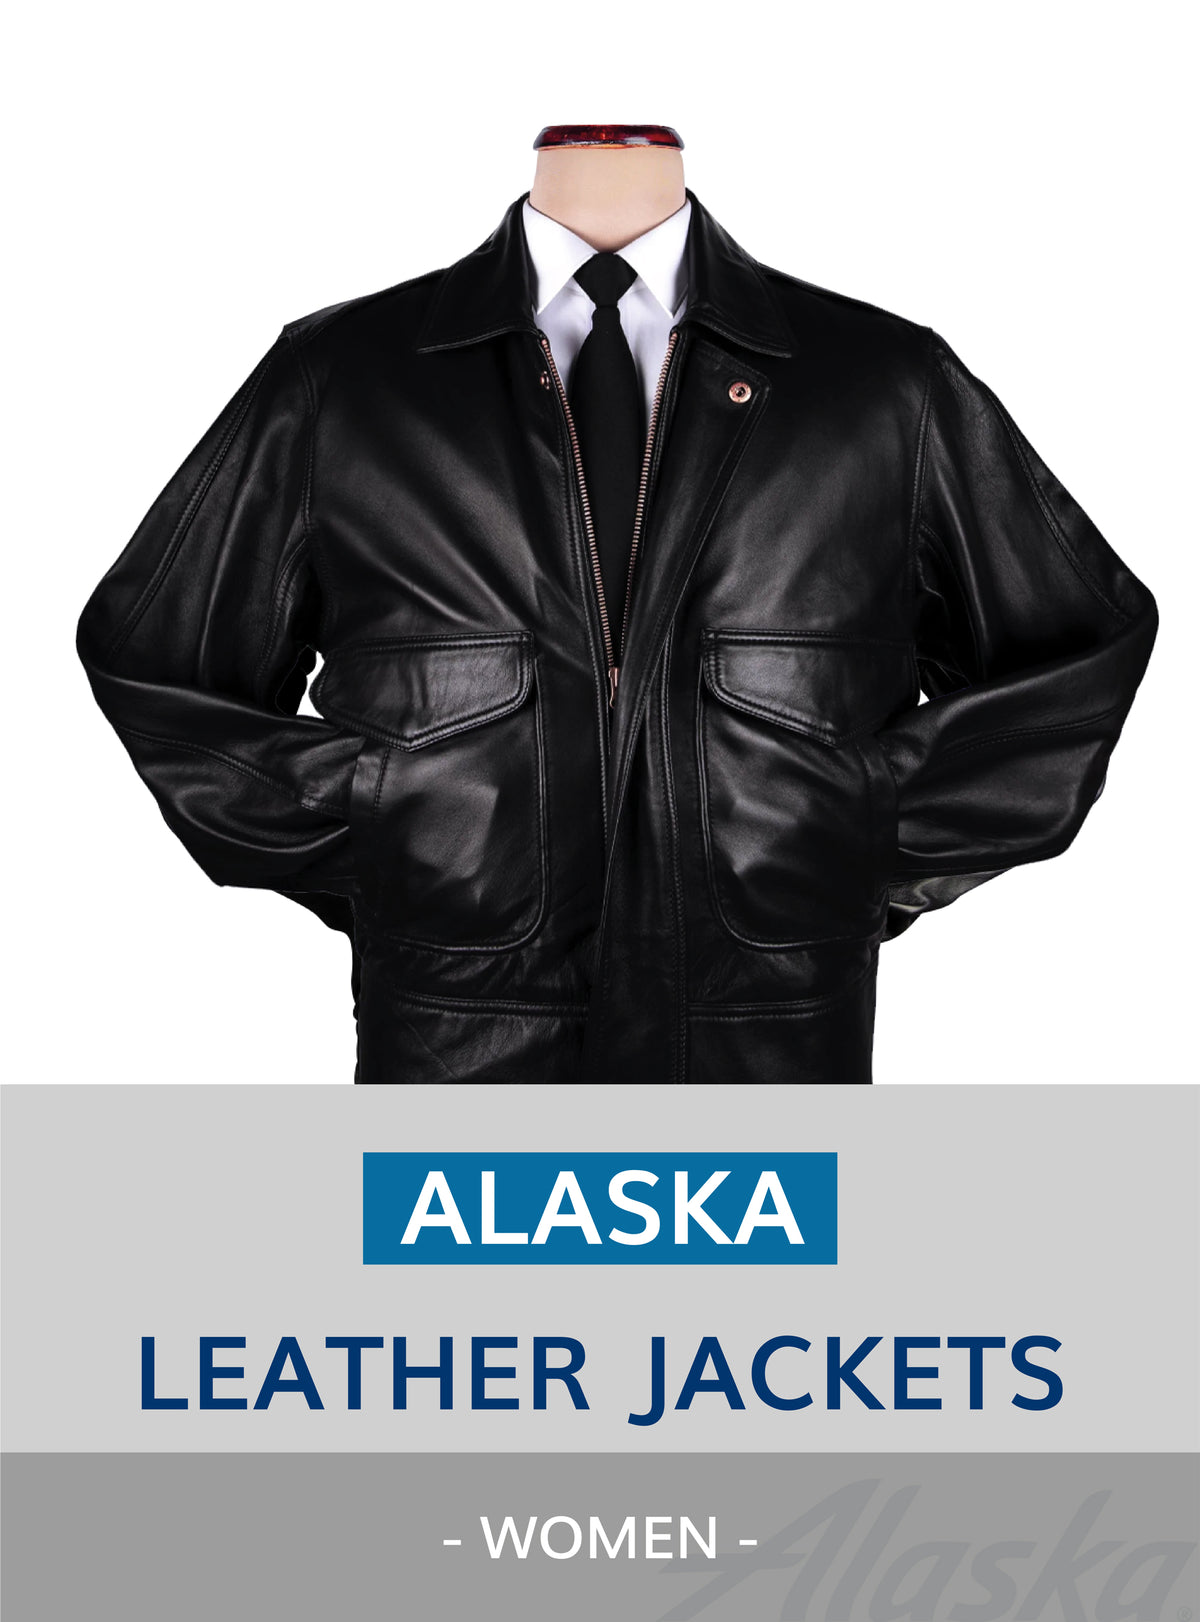 Alaska leather Jacket for women